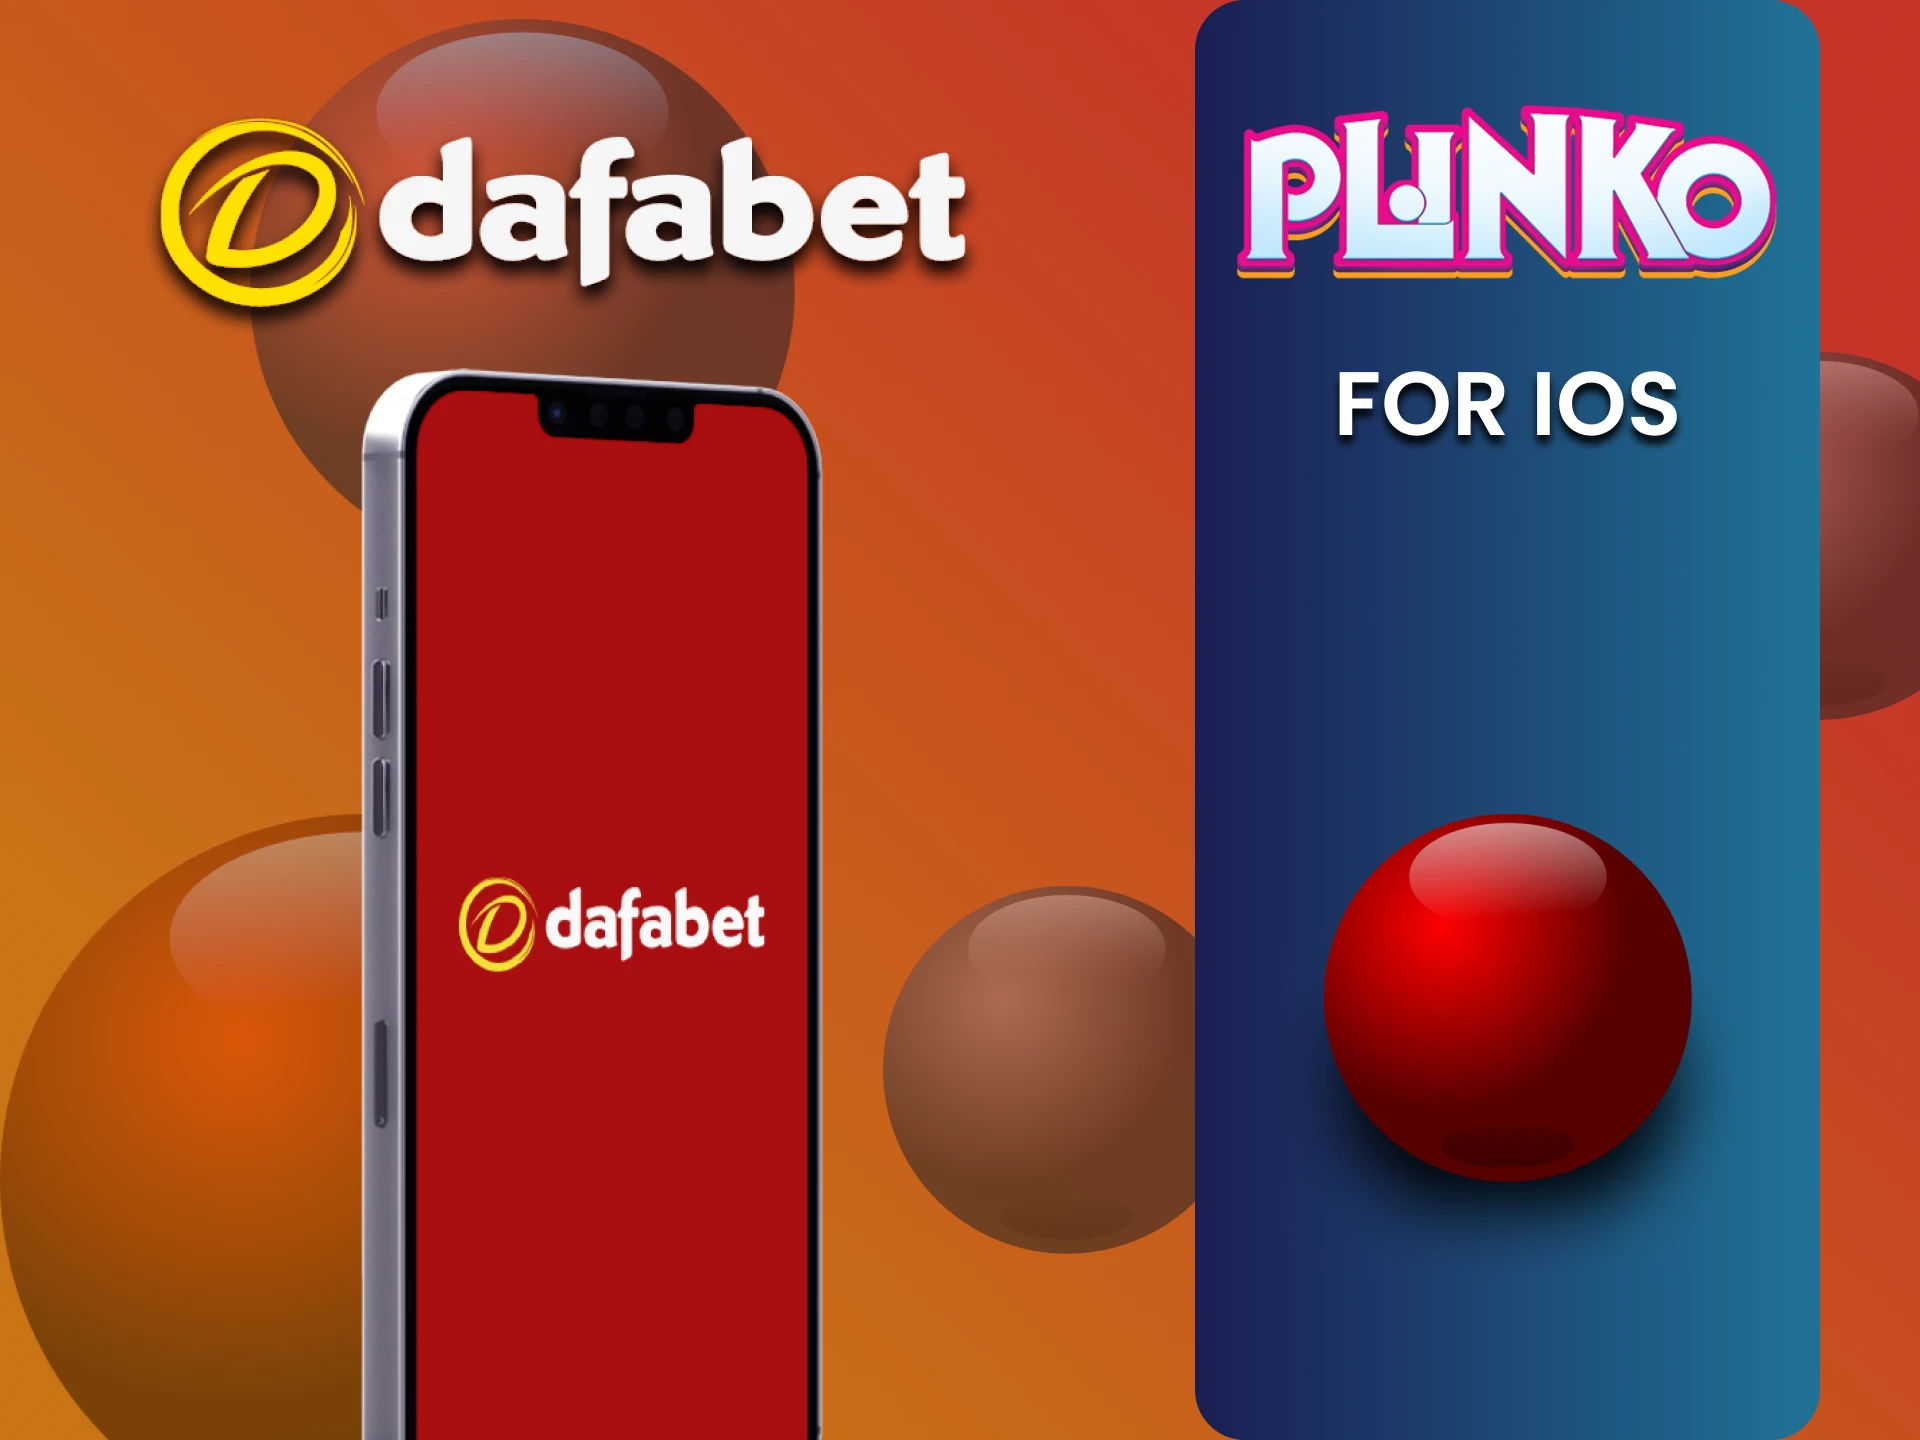 Download the Dafabet app to play Plinko on iOS.